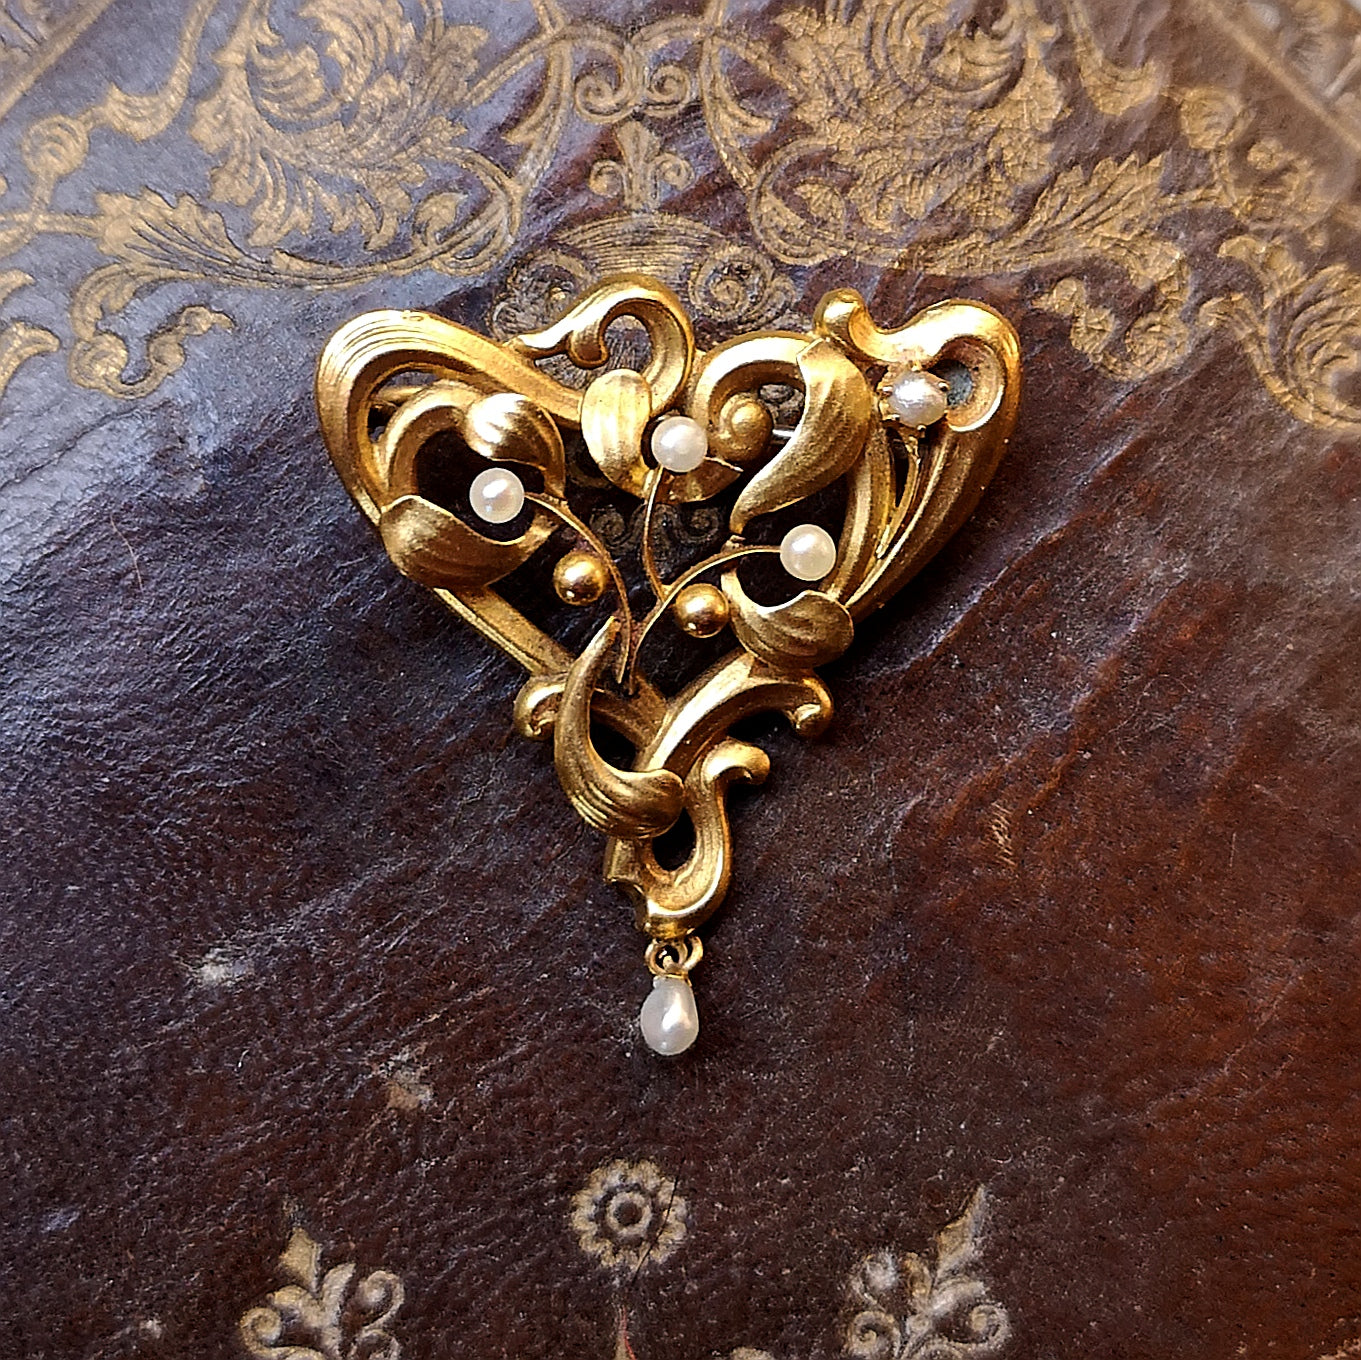 The Art Nouveau mistletoe gold and pearl brooch - Medea's Mix